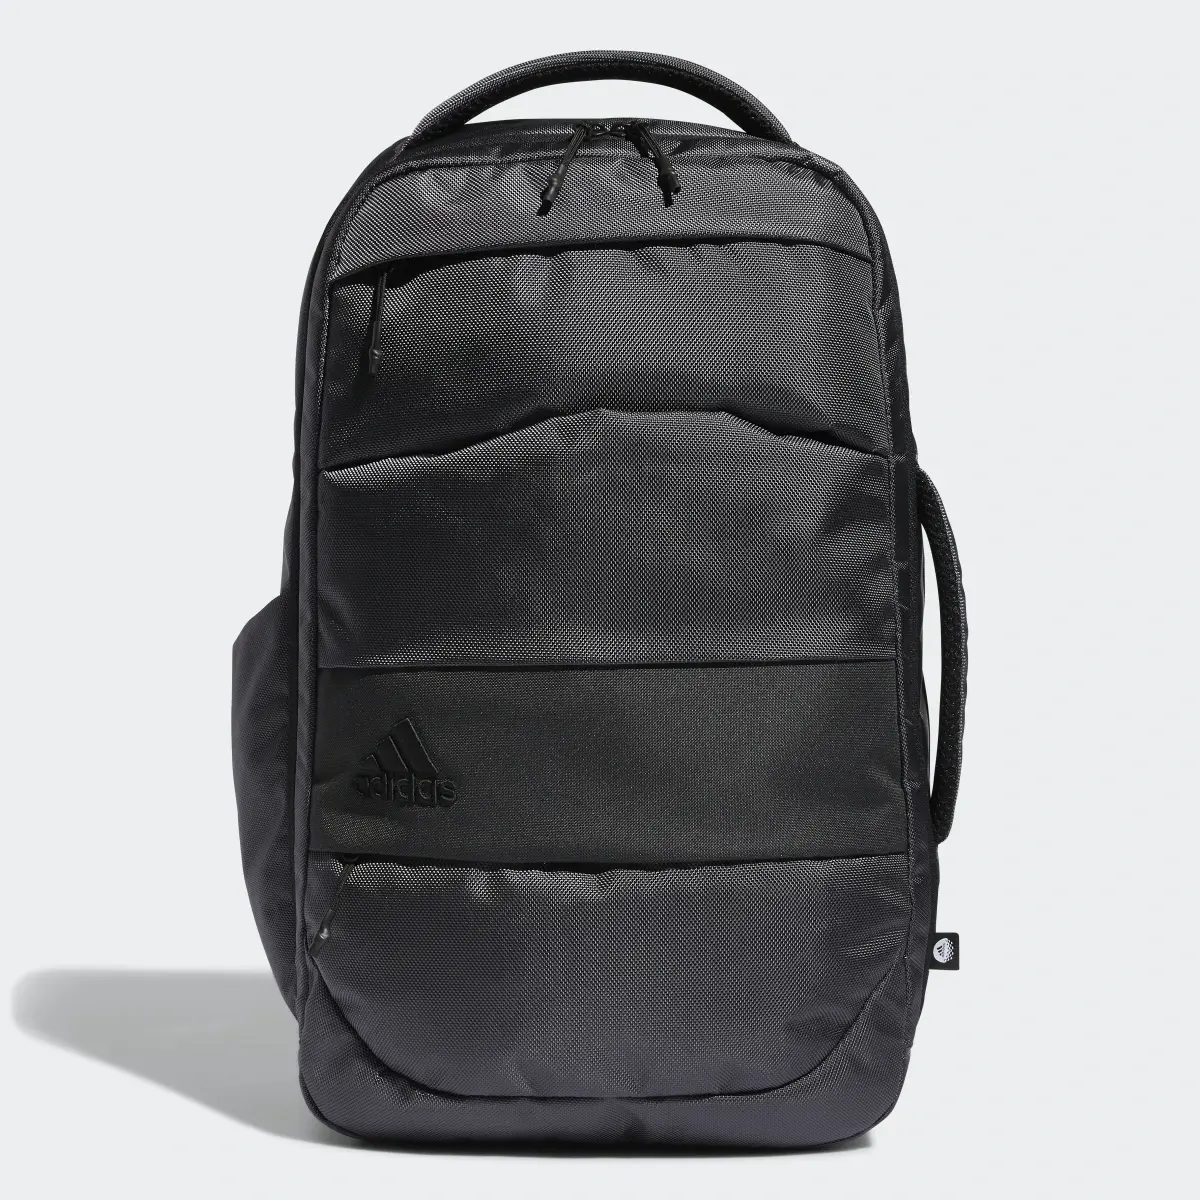 Adidas Golf Premium Backpack. 2